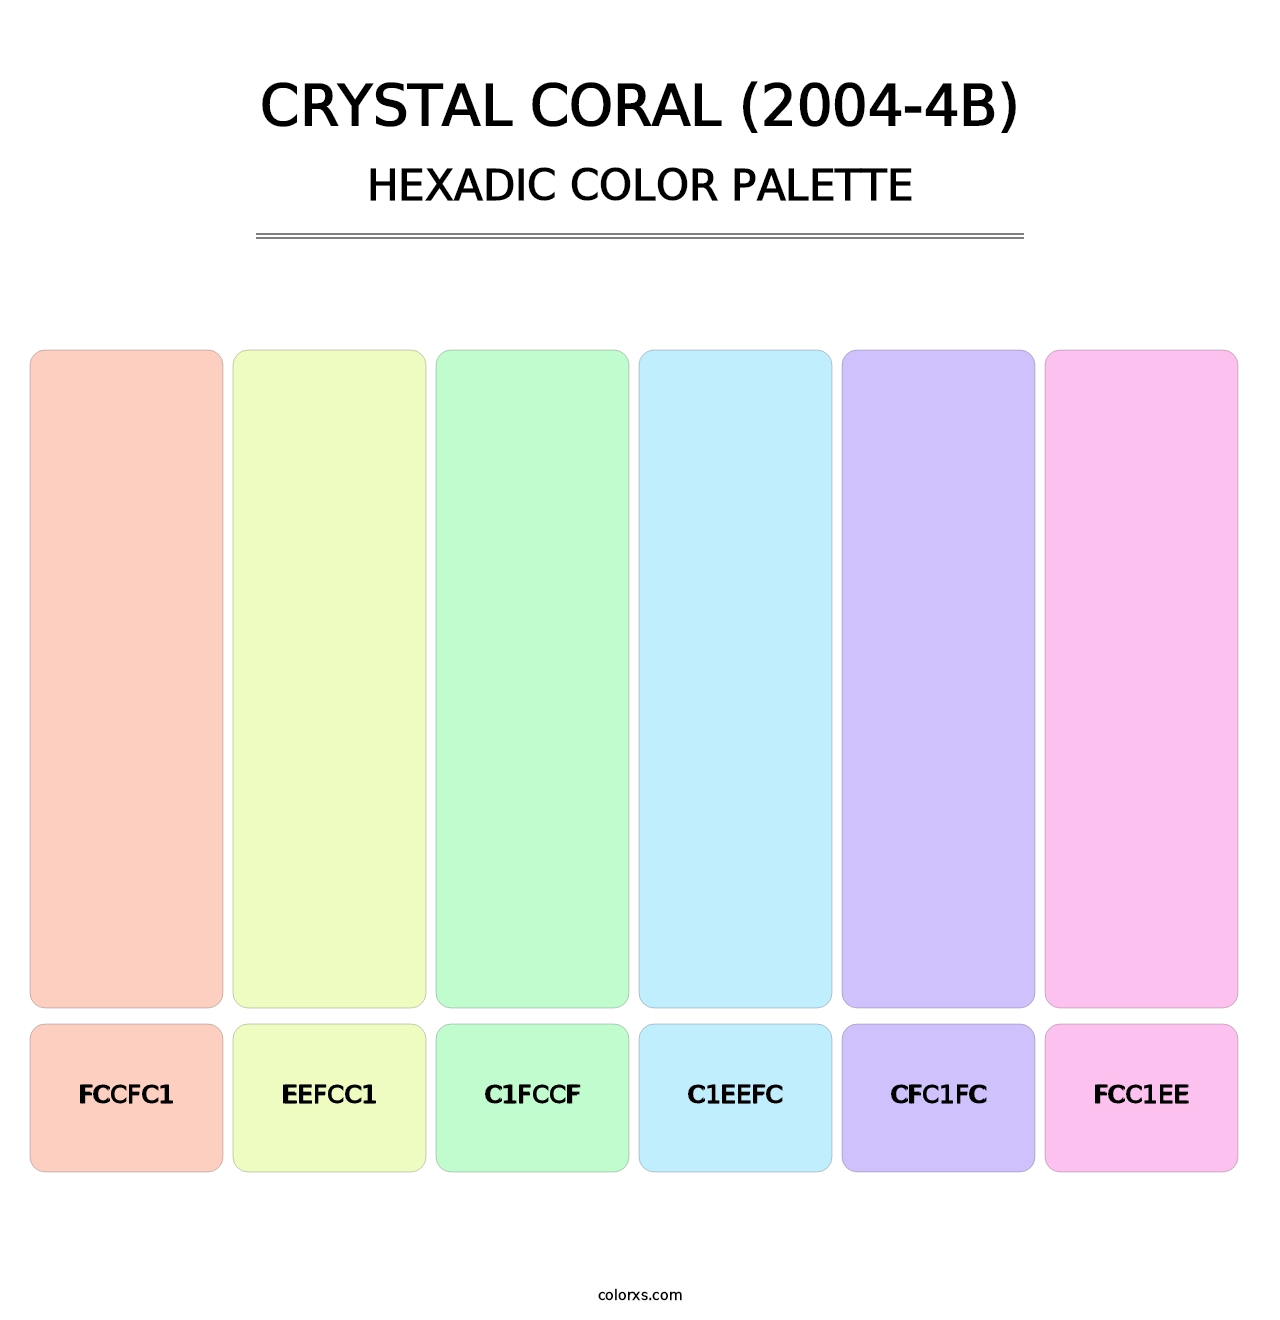 Crystal Coral (2004-4B) - Hexadic Color Palette